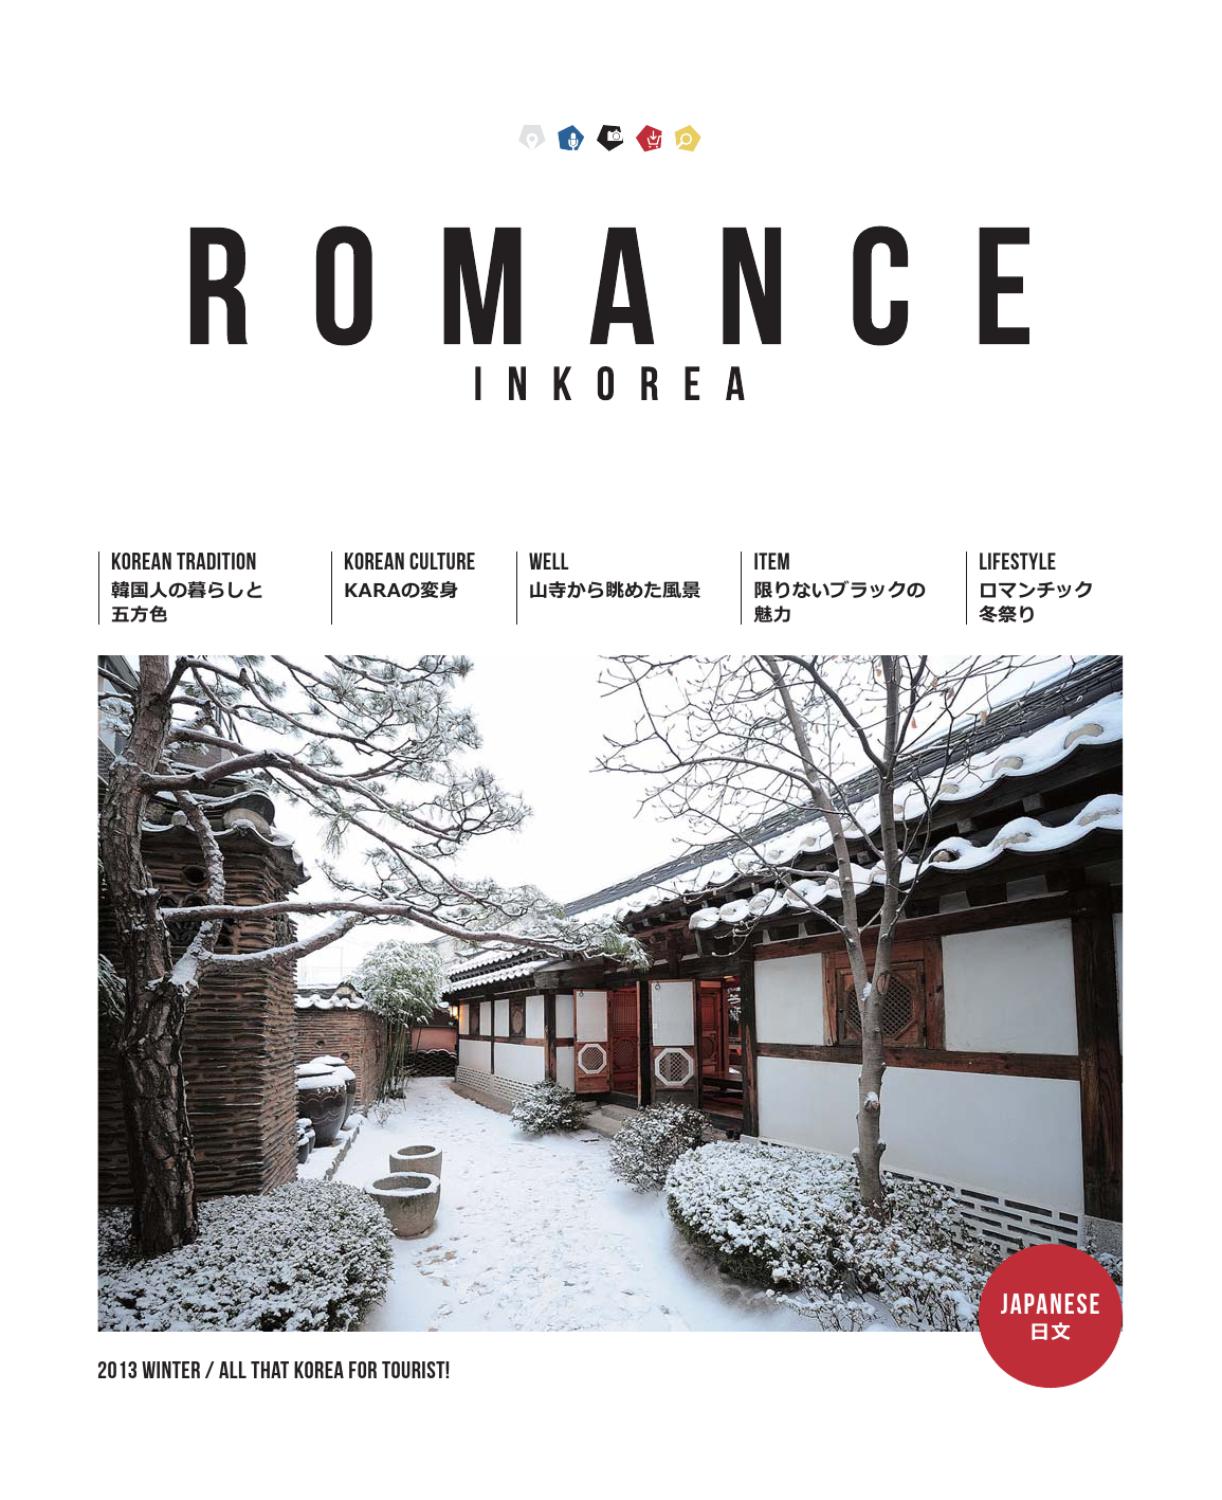 Salon De Jardin Bistrot Génial Romance In Korea Japanese by Naaf Media & Design issuu